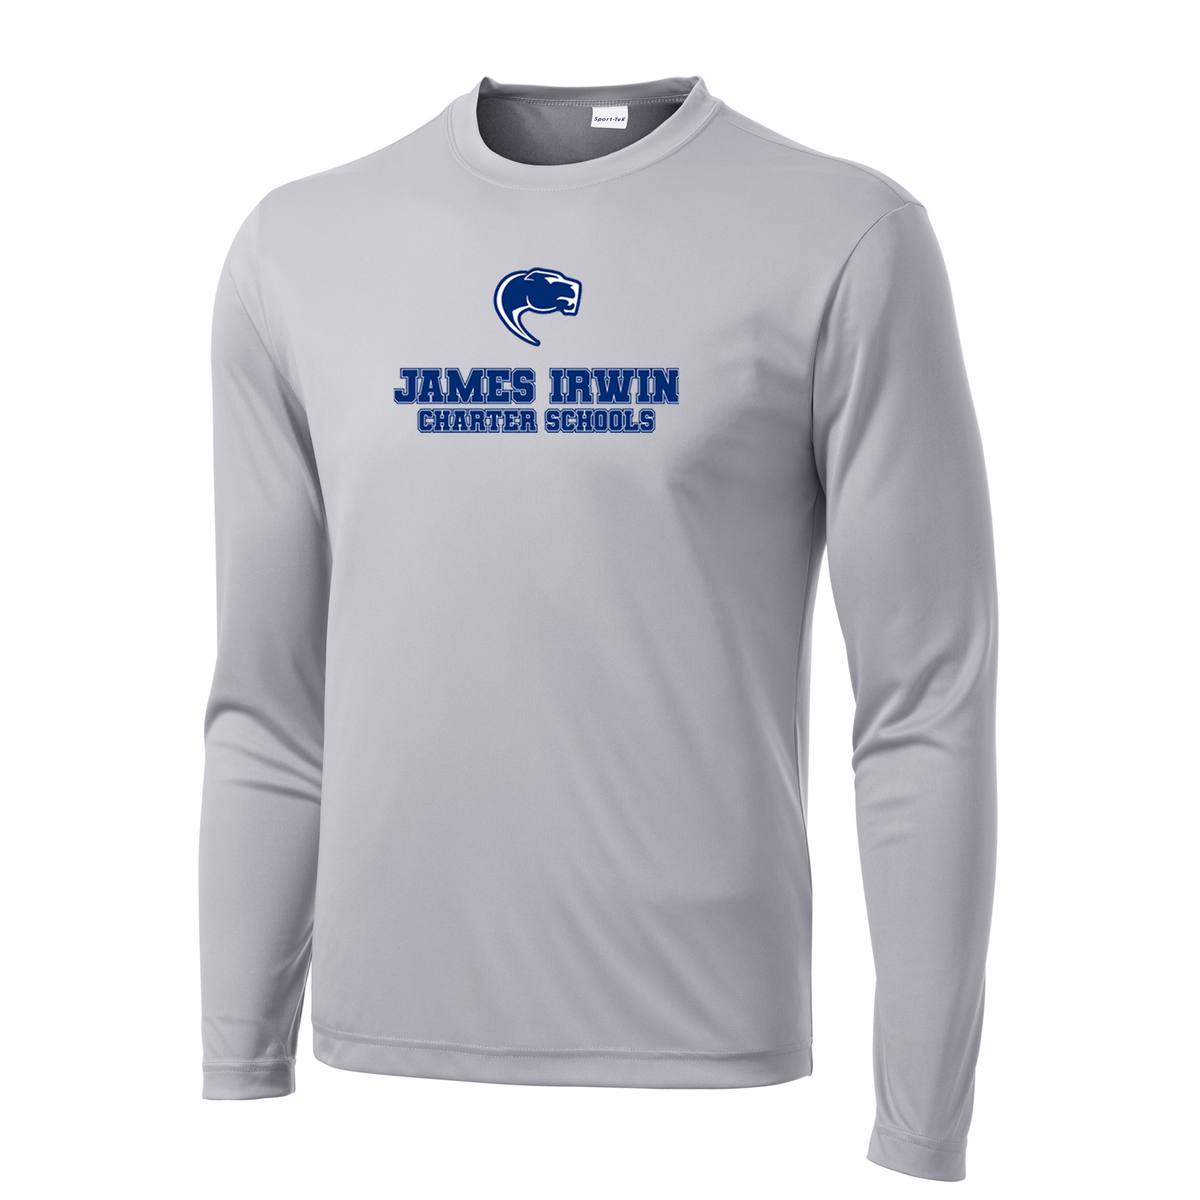 James Irwin Charter Schools Long Sleeve Performance Shirt